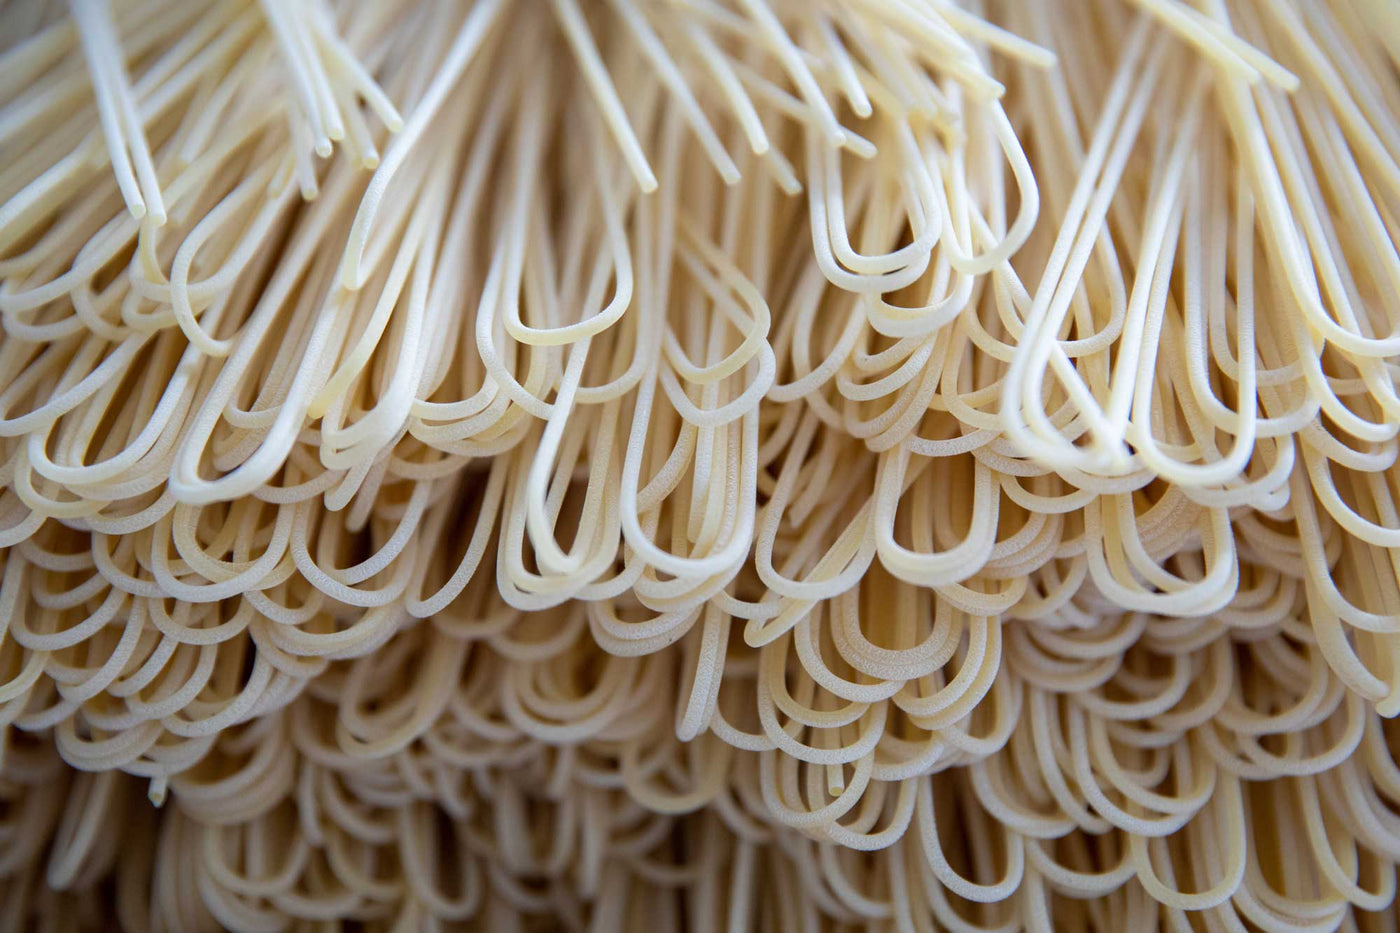 Strampelli Amatrice Spaghetti - The Real Pasta for Amatriciana